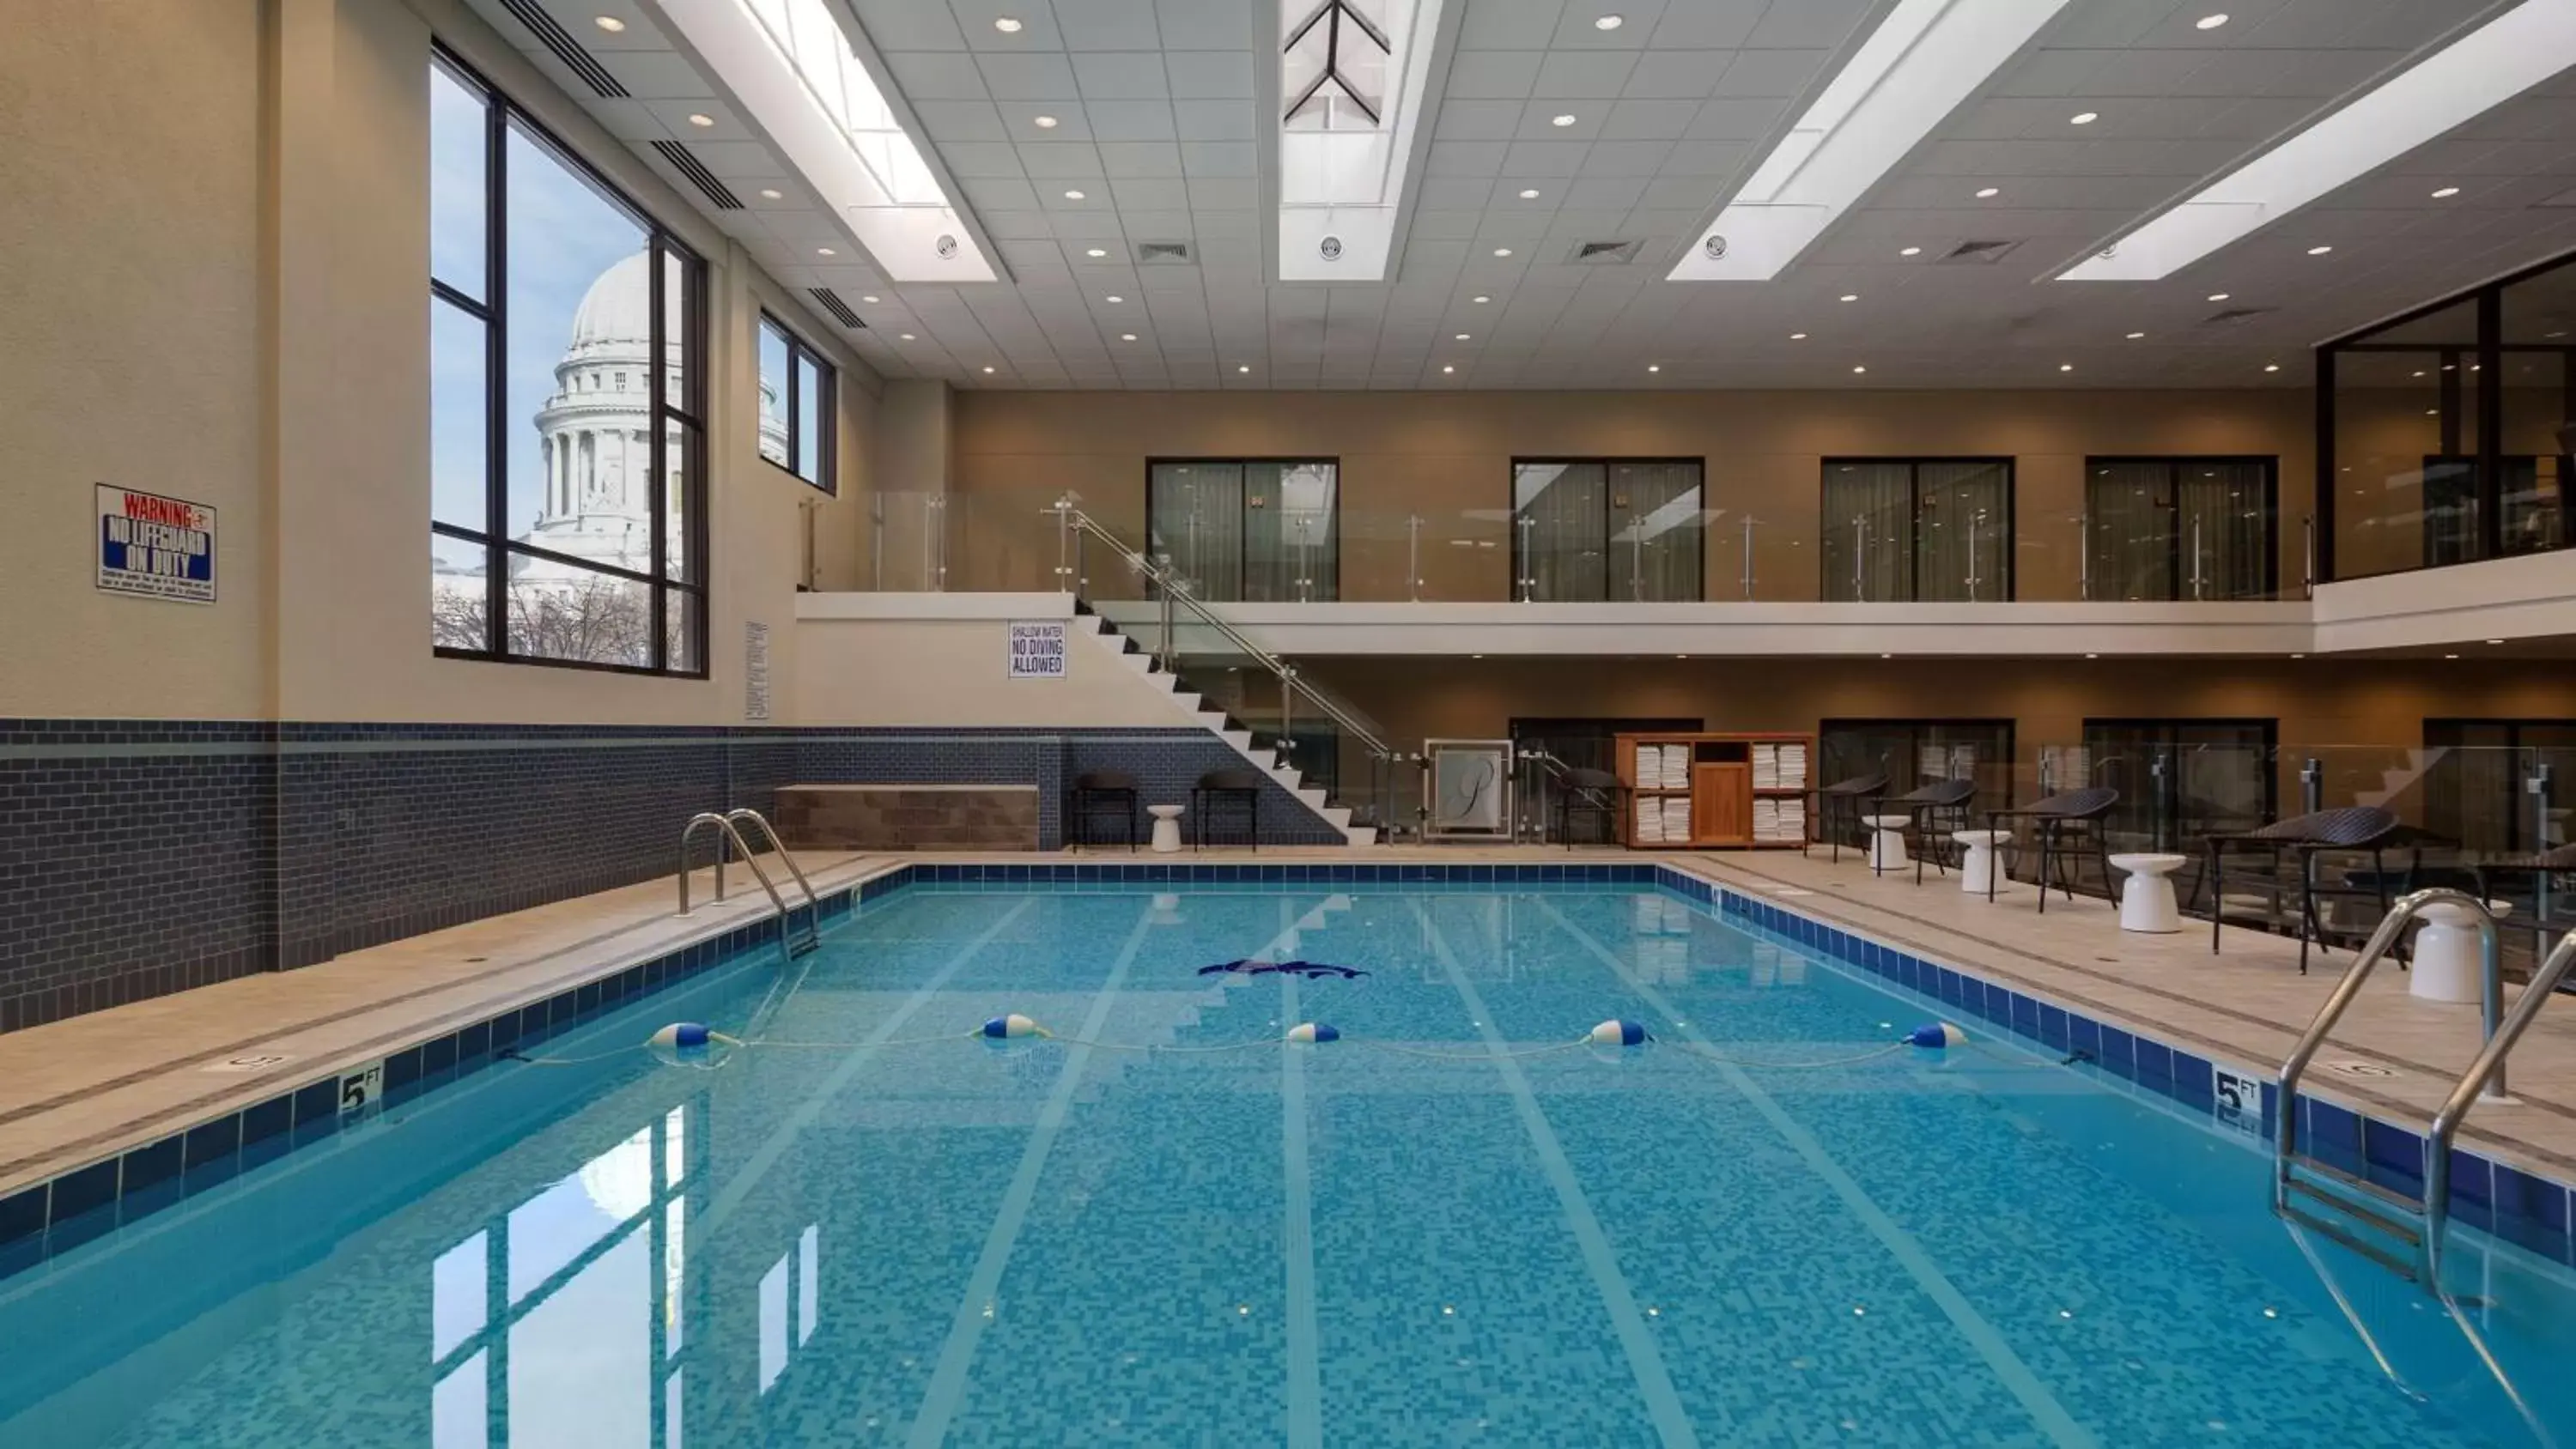 On site, Swimming Pool in Best Western Premier Park Hotel